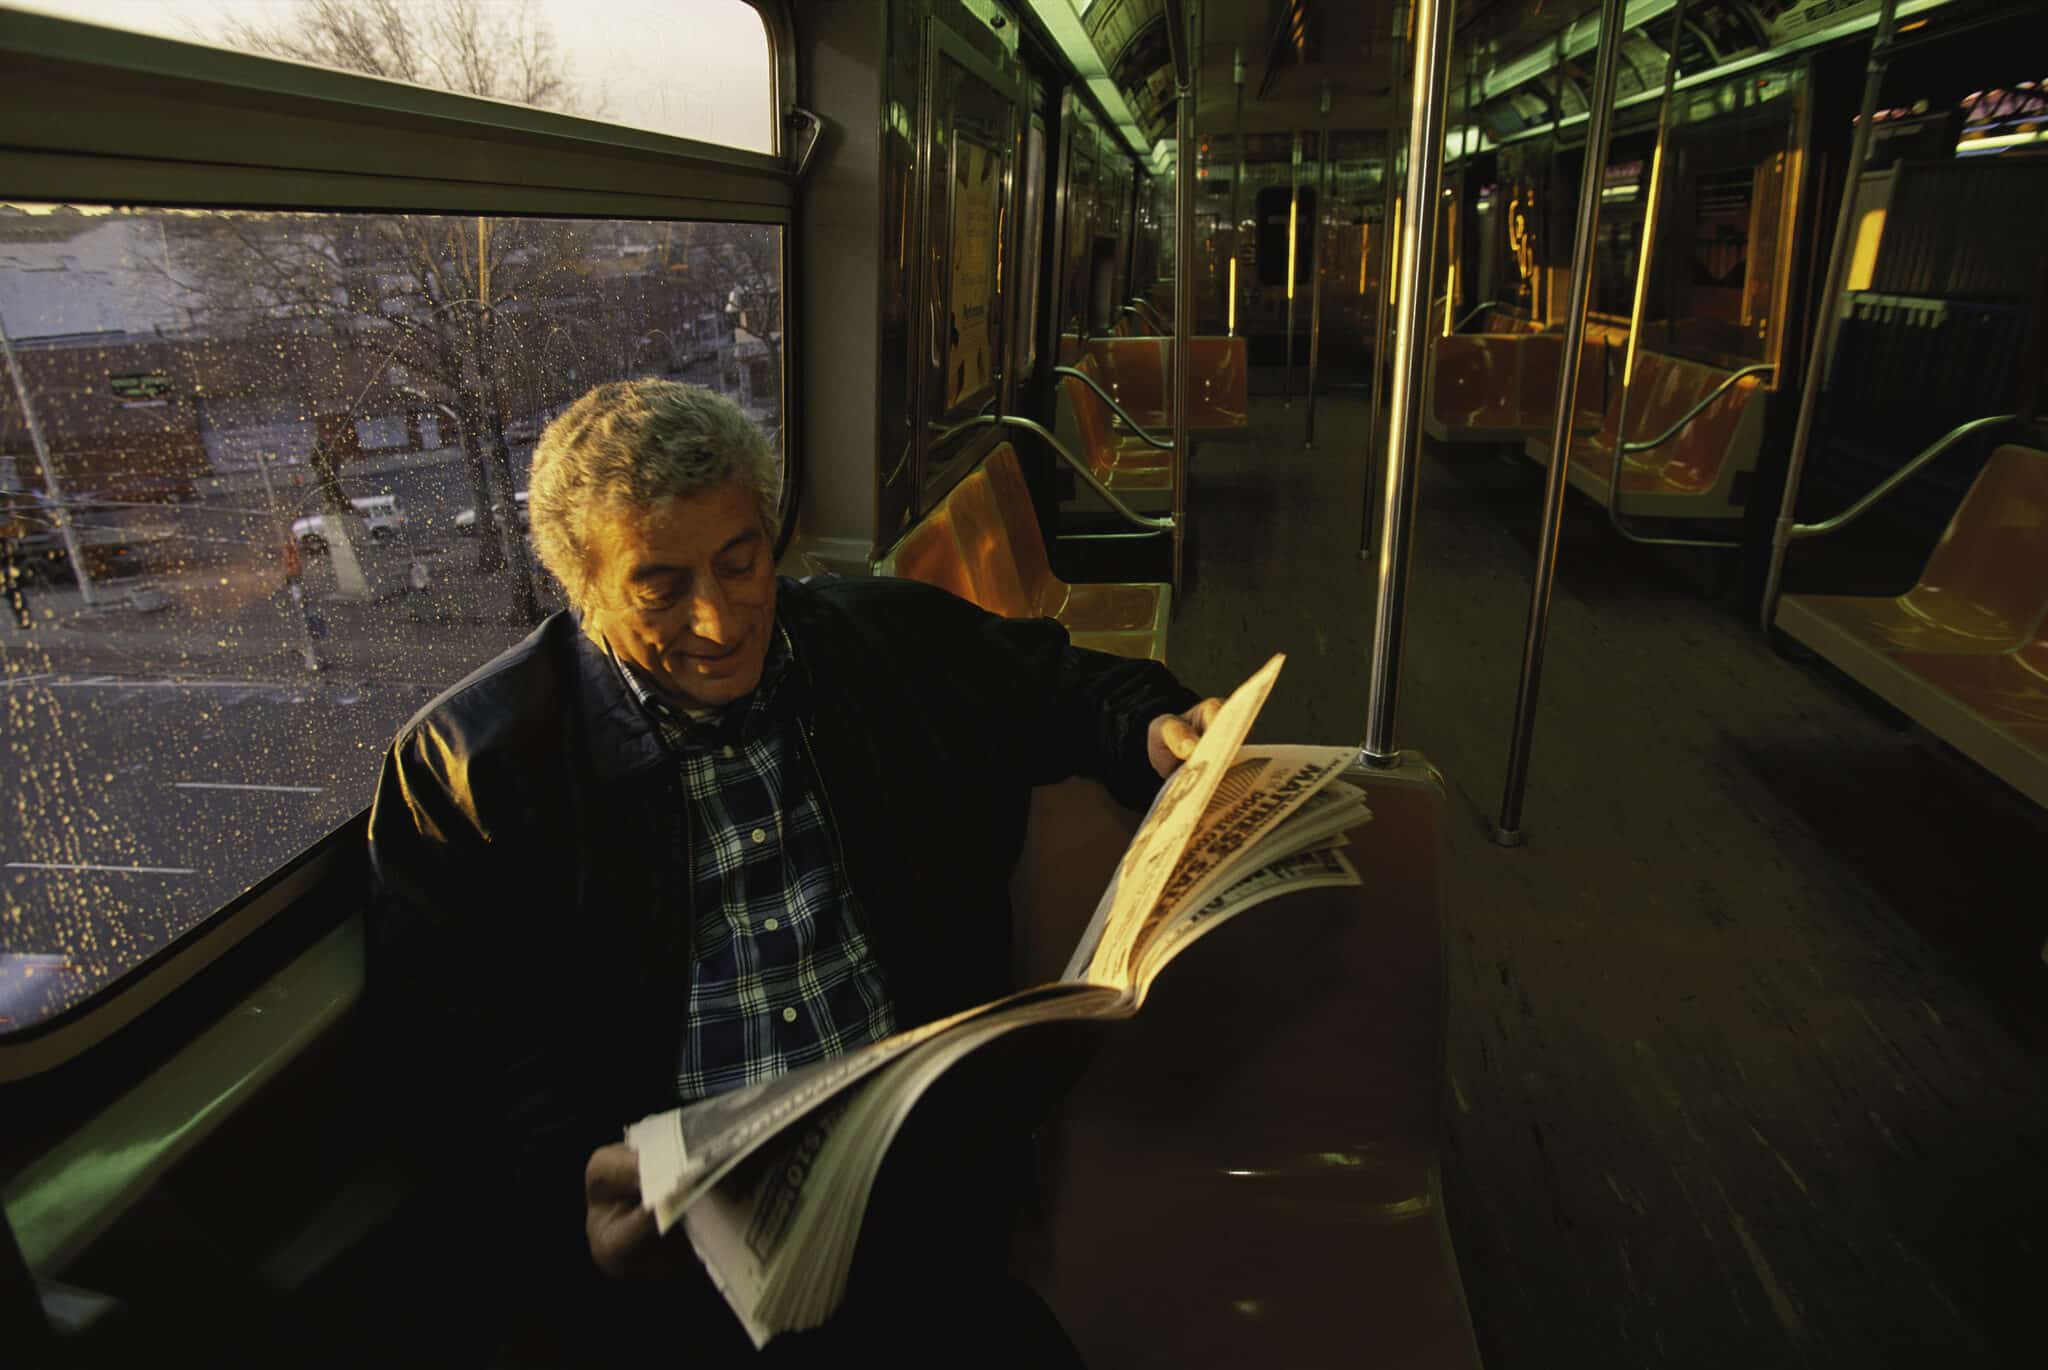 Tony Bennett on the subway reading the newspaper